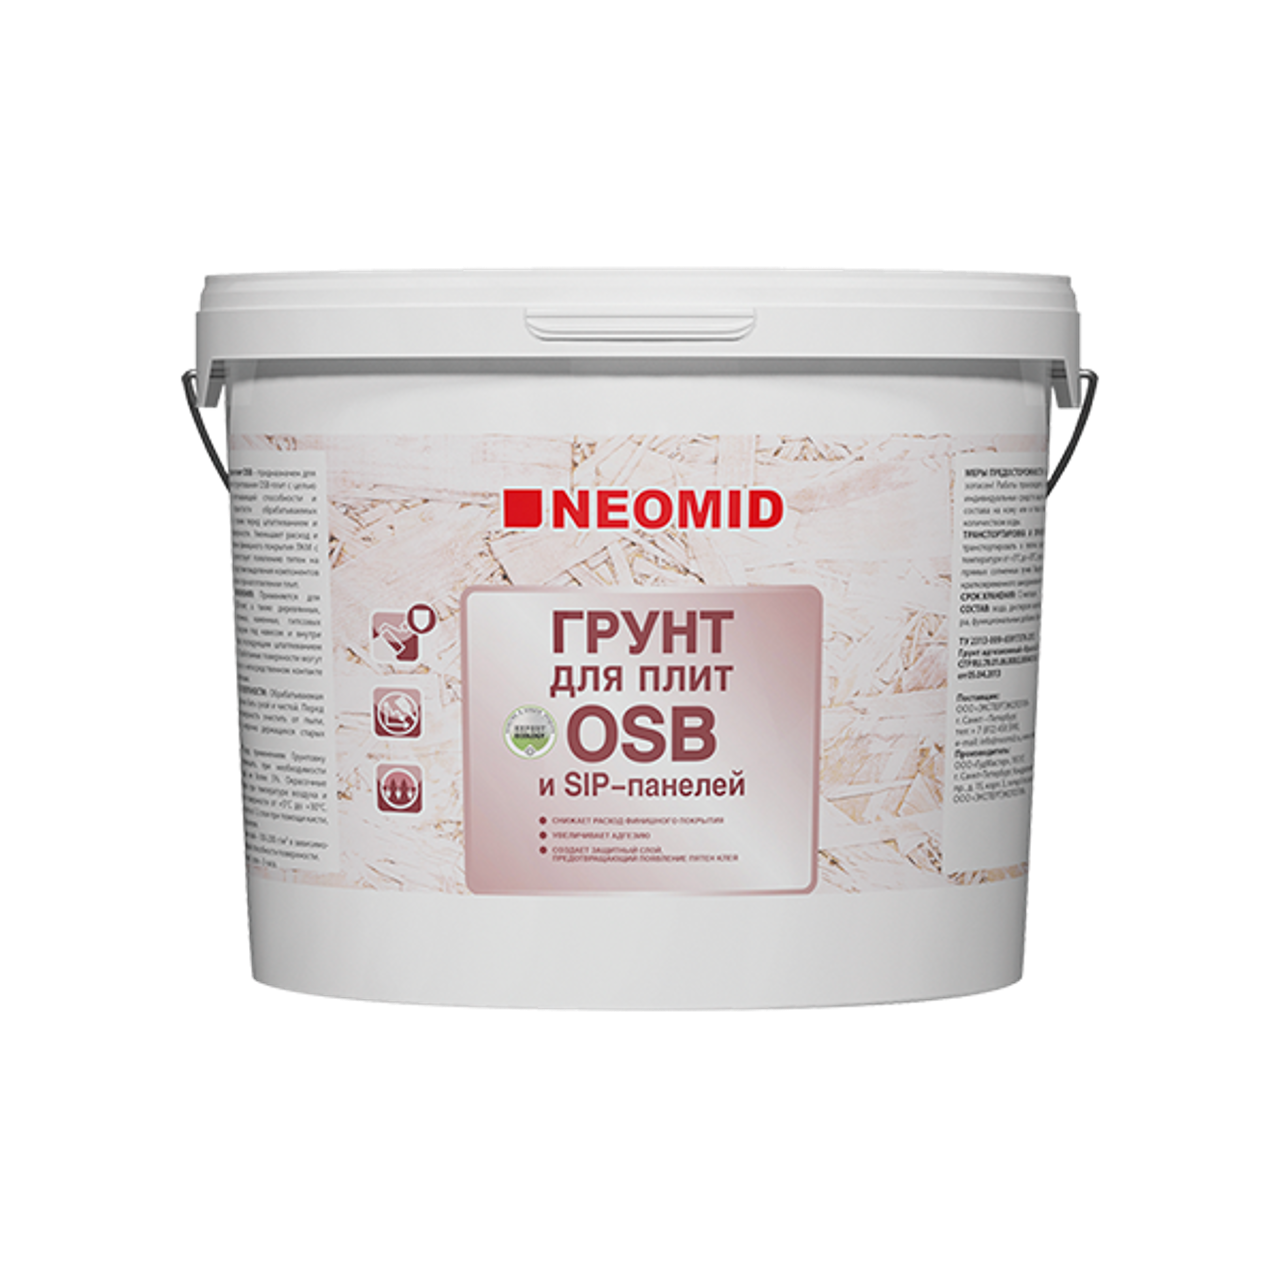 Грунт NEOMID для плит OSB 7кг. Грунтовка для плит ОСБ Неомид-7. NEOMID грунт для OSB плит. Краска-грунт для плит OSB // 1кг // NEOMID.